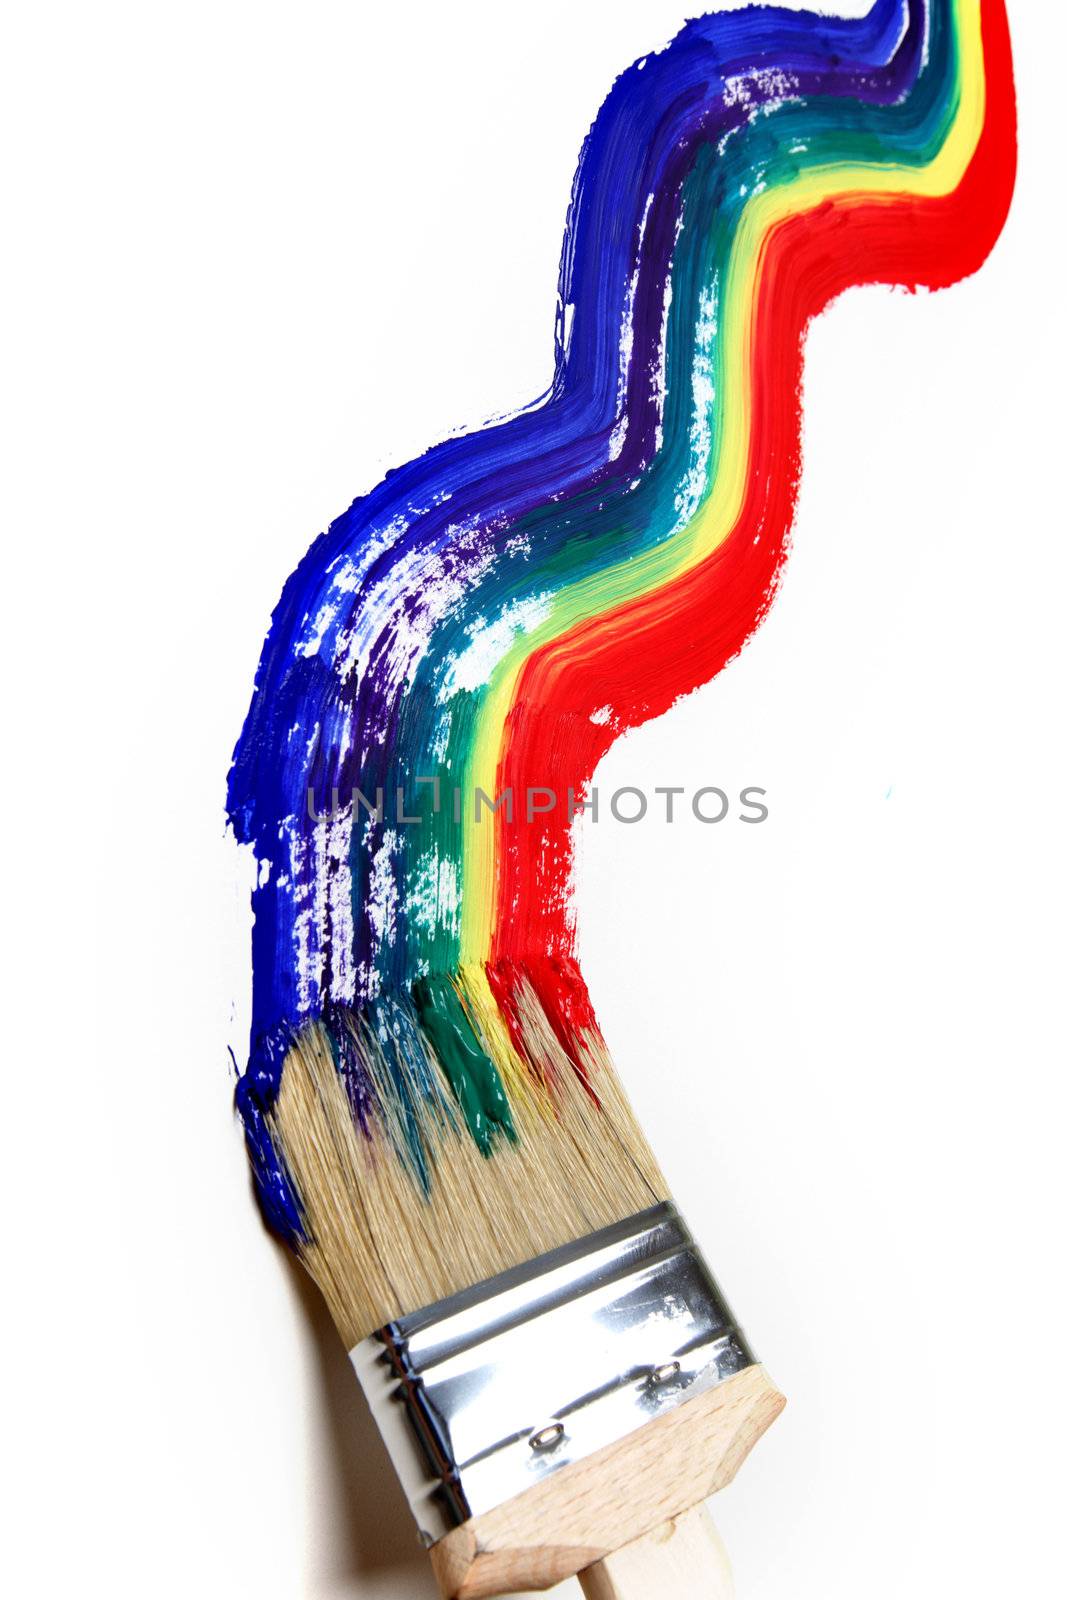 rainbow paint by Yellowj